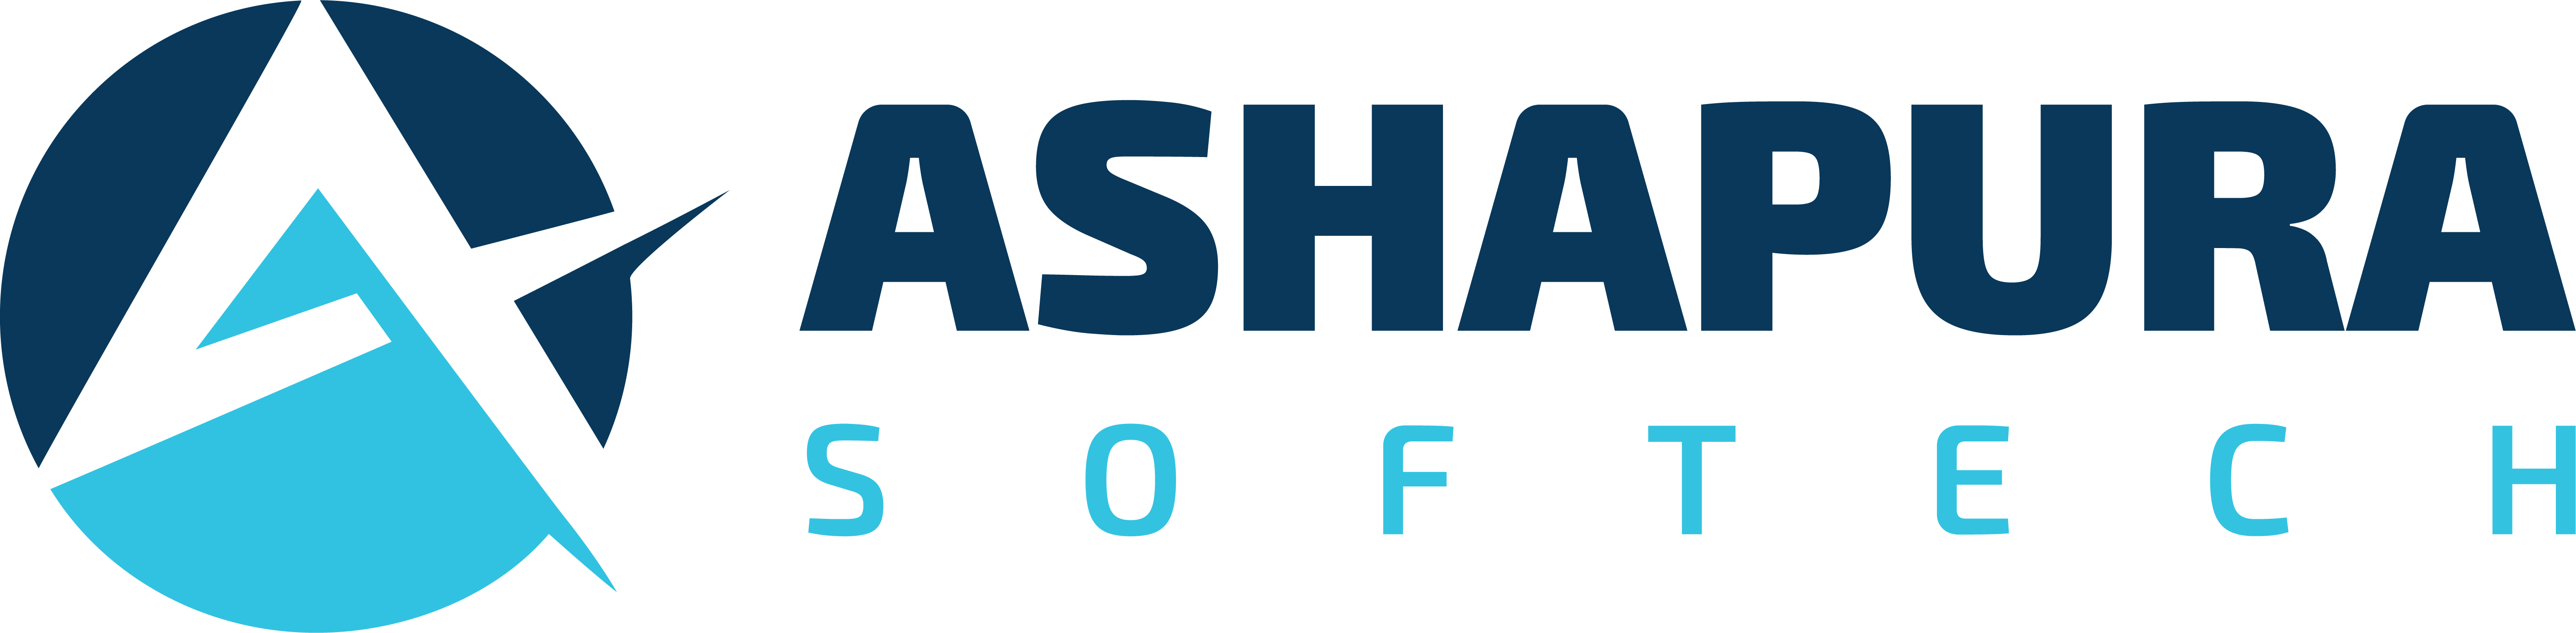 Ashapura Softech Inc